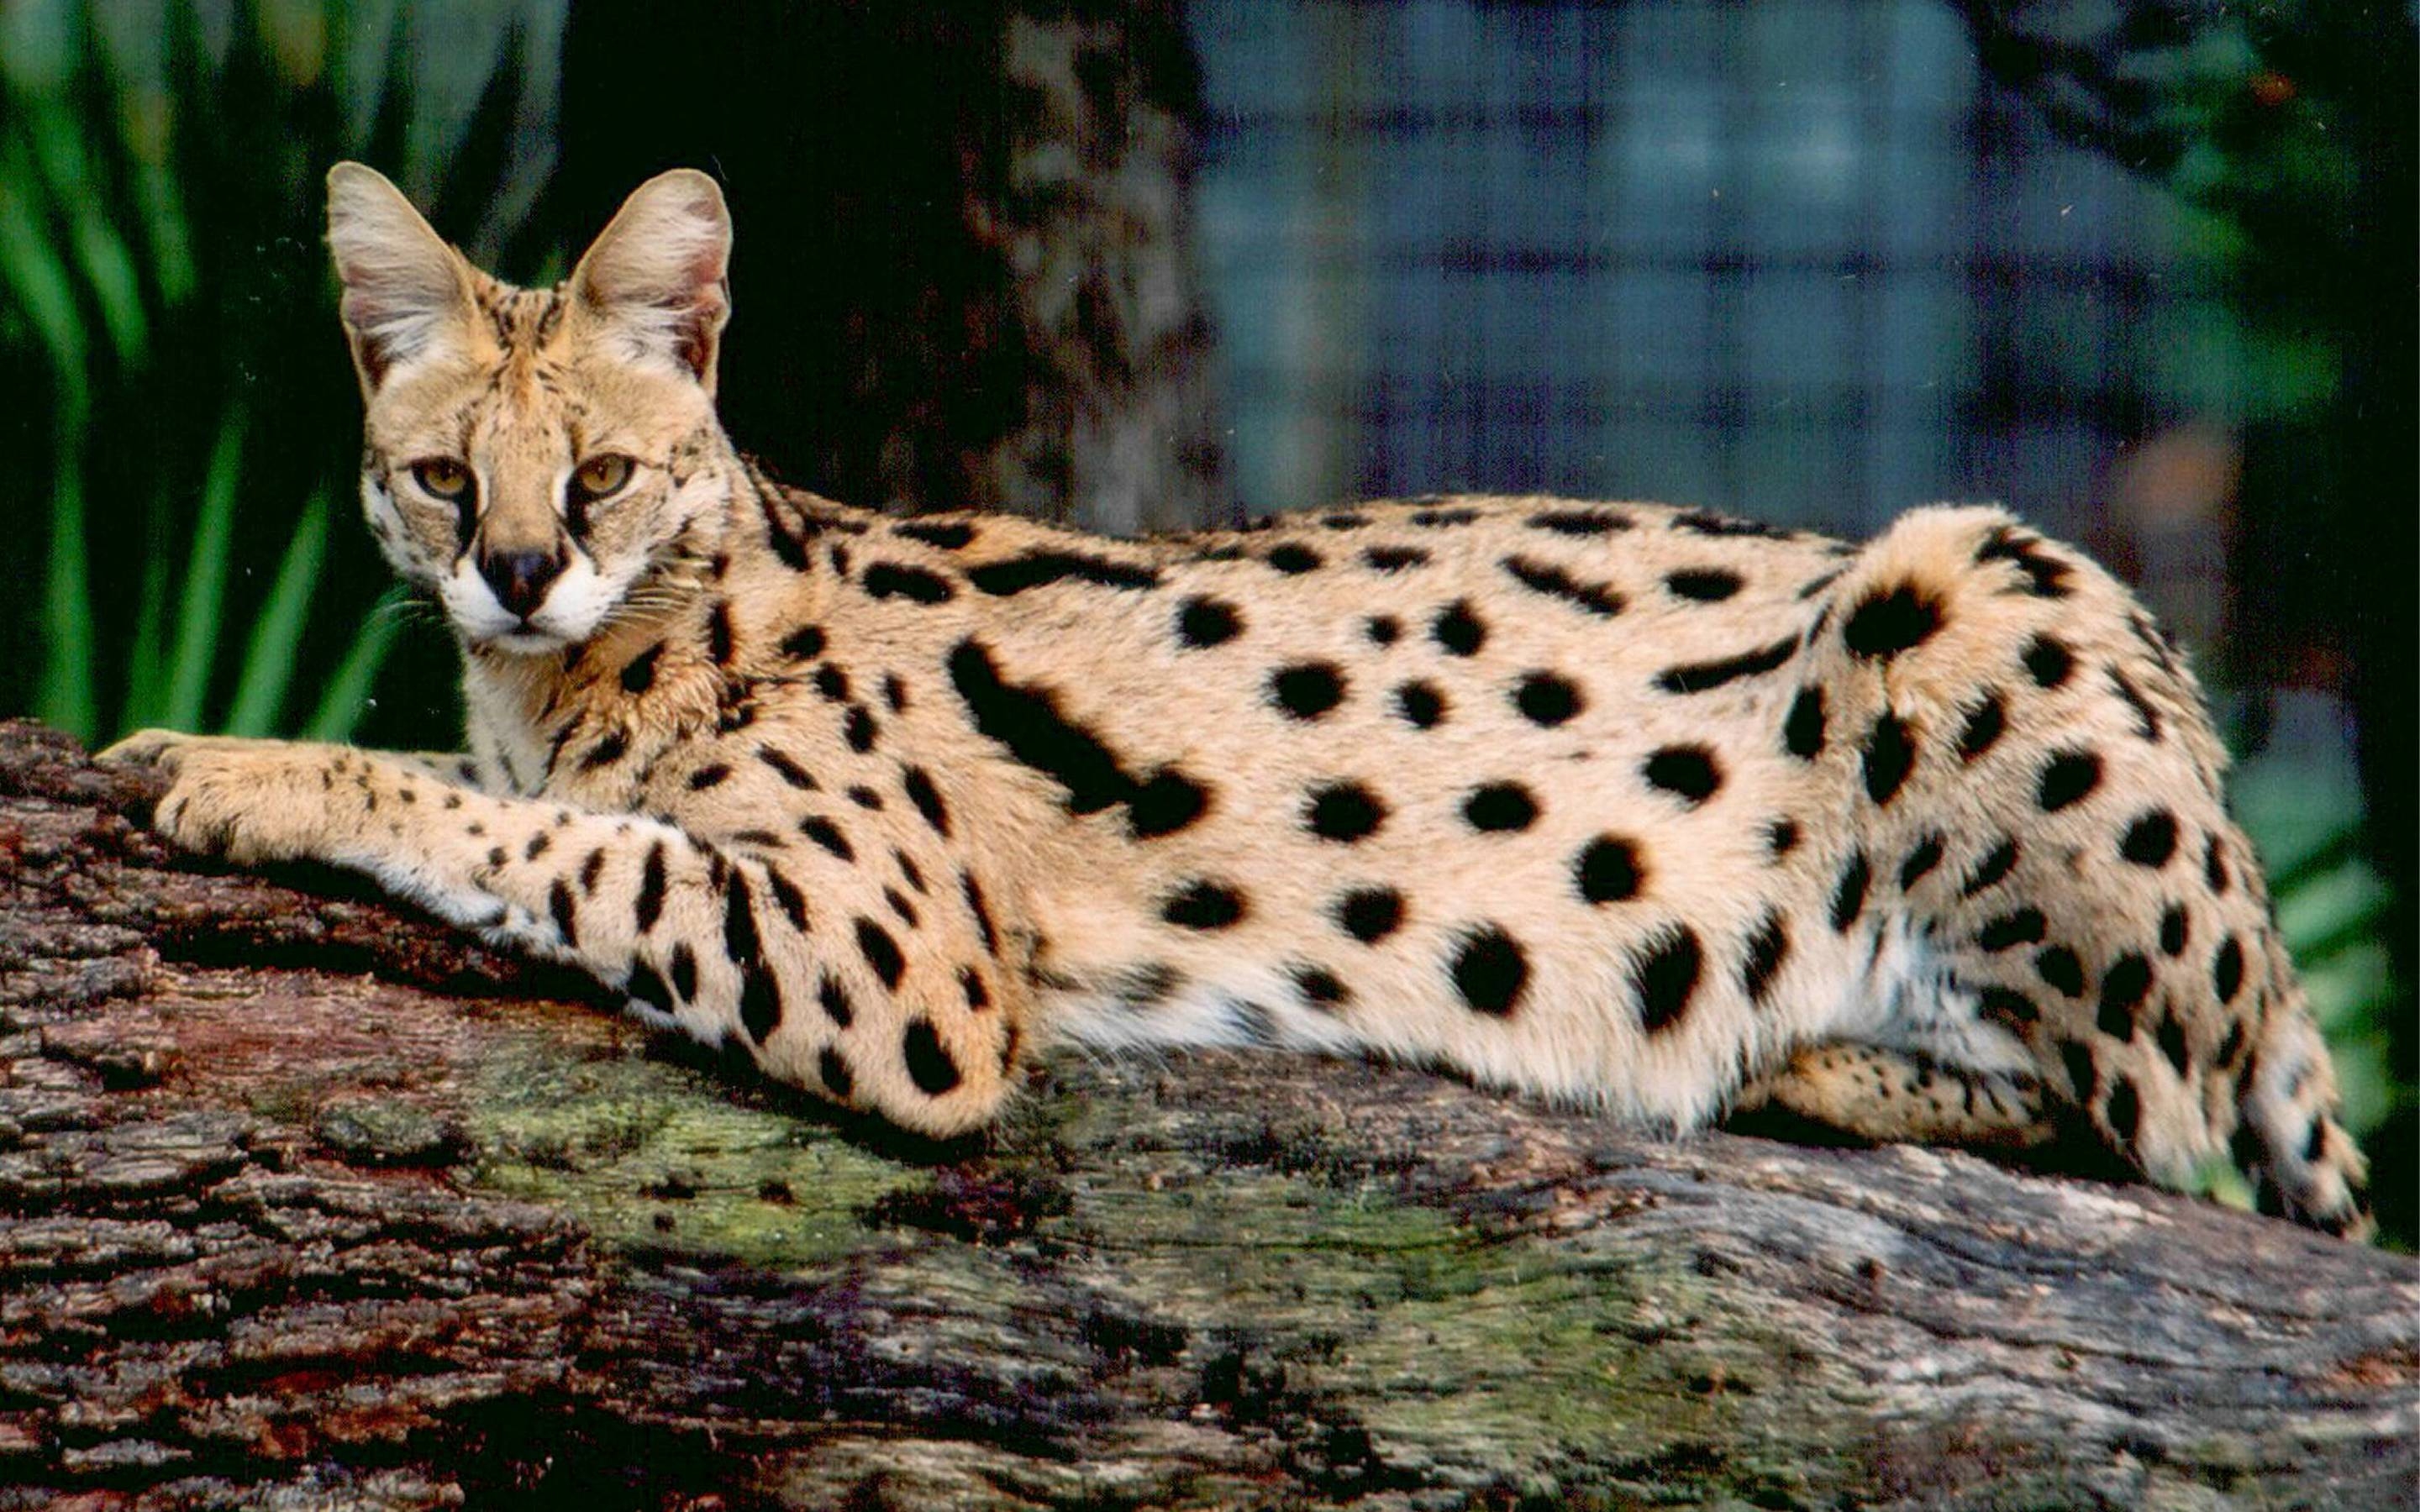 Savannah Cat Pose for 2880 x 1800 Retina Display resolution